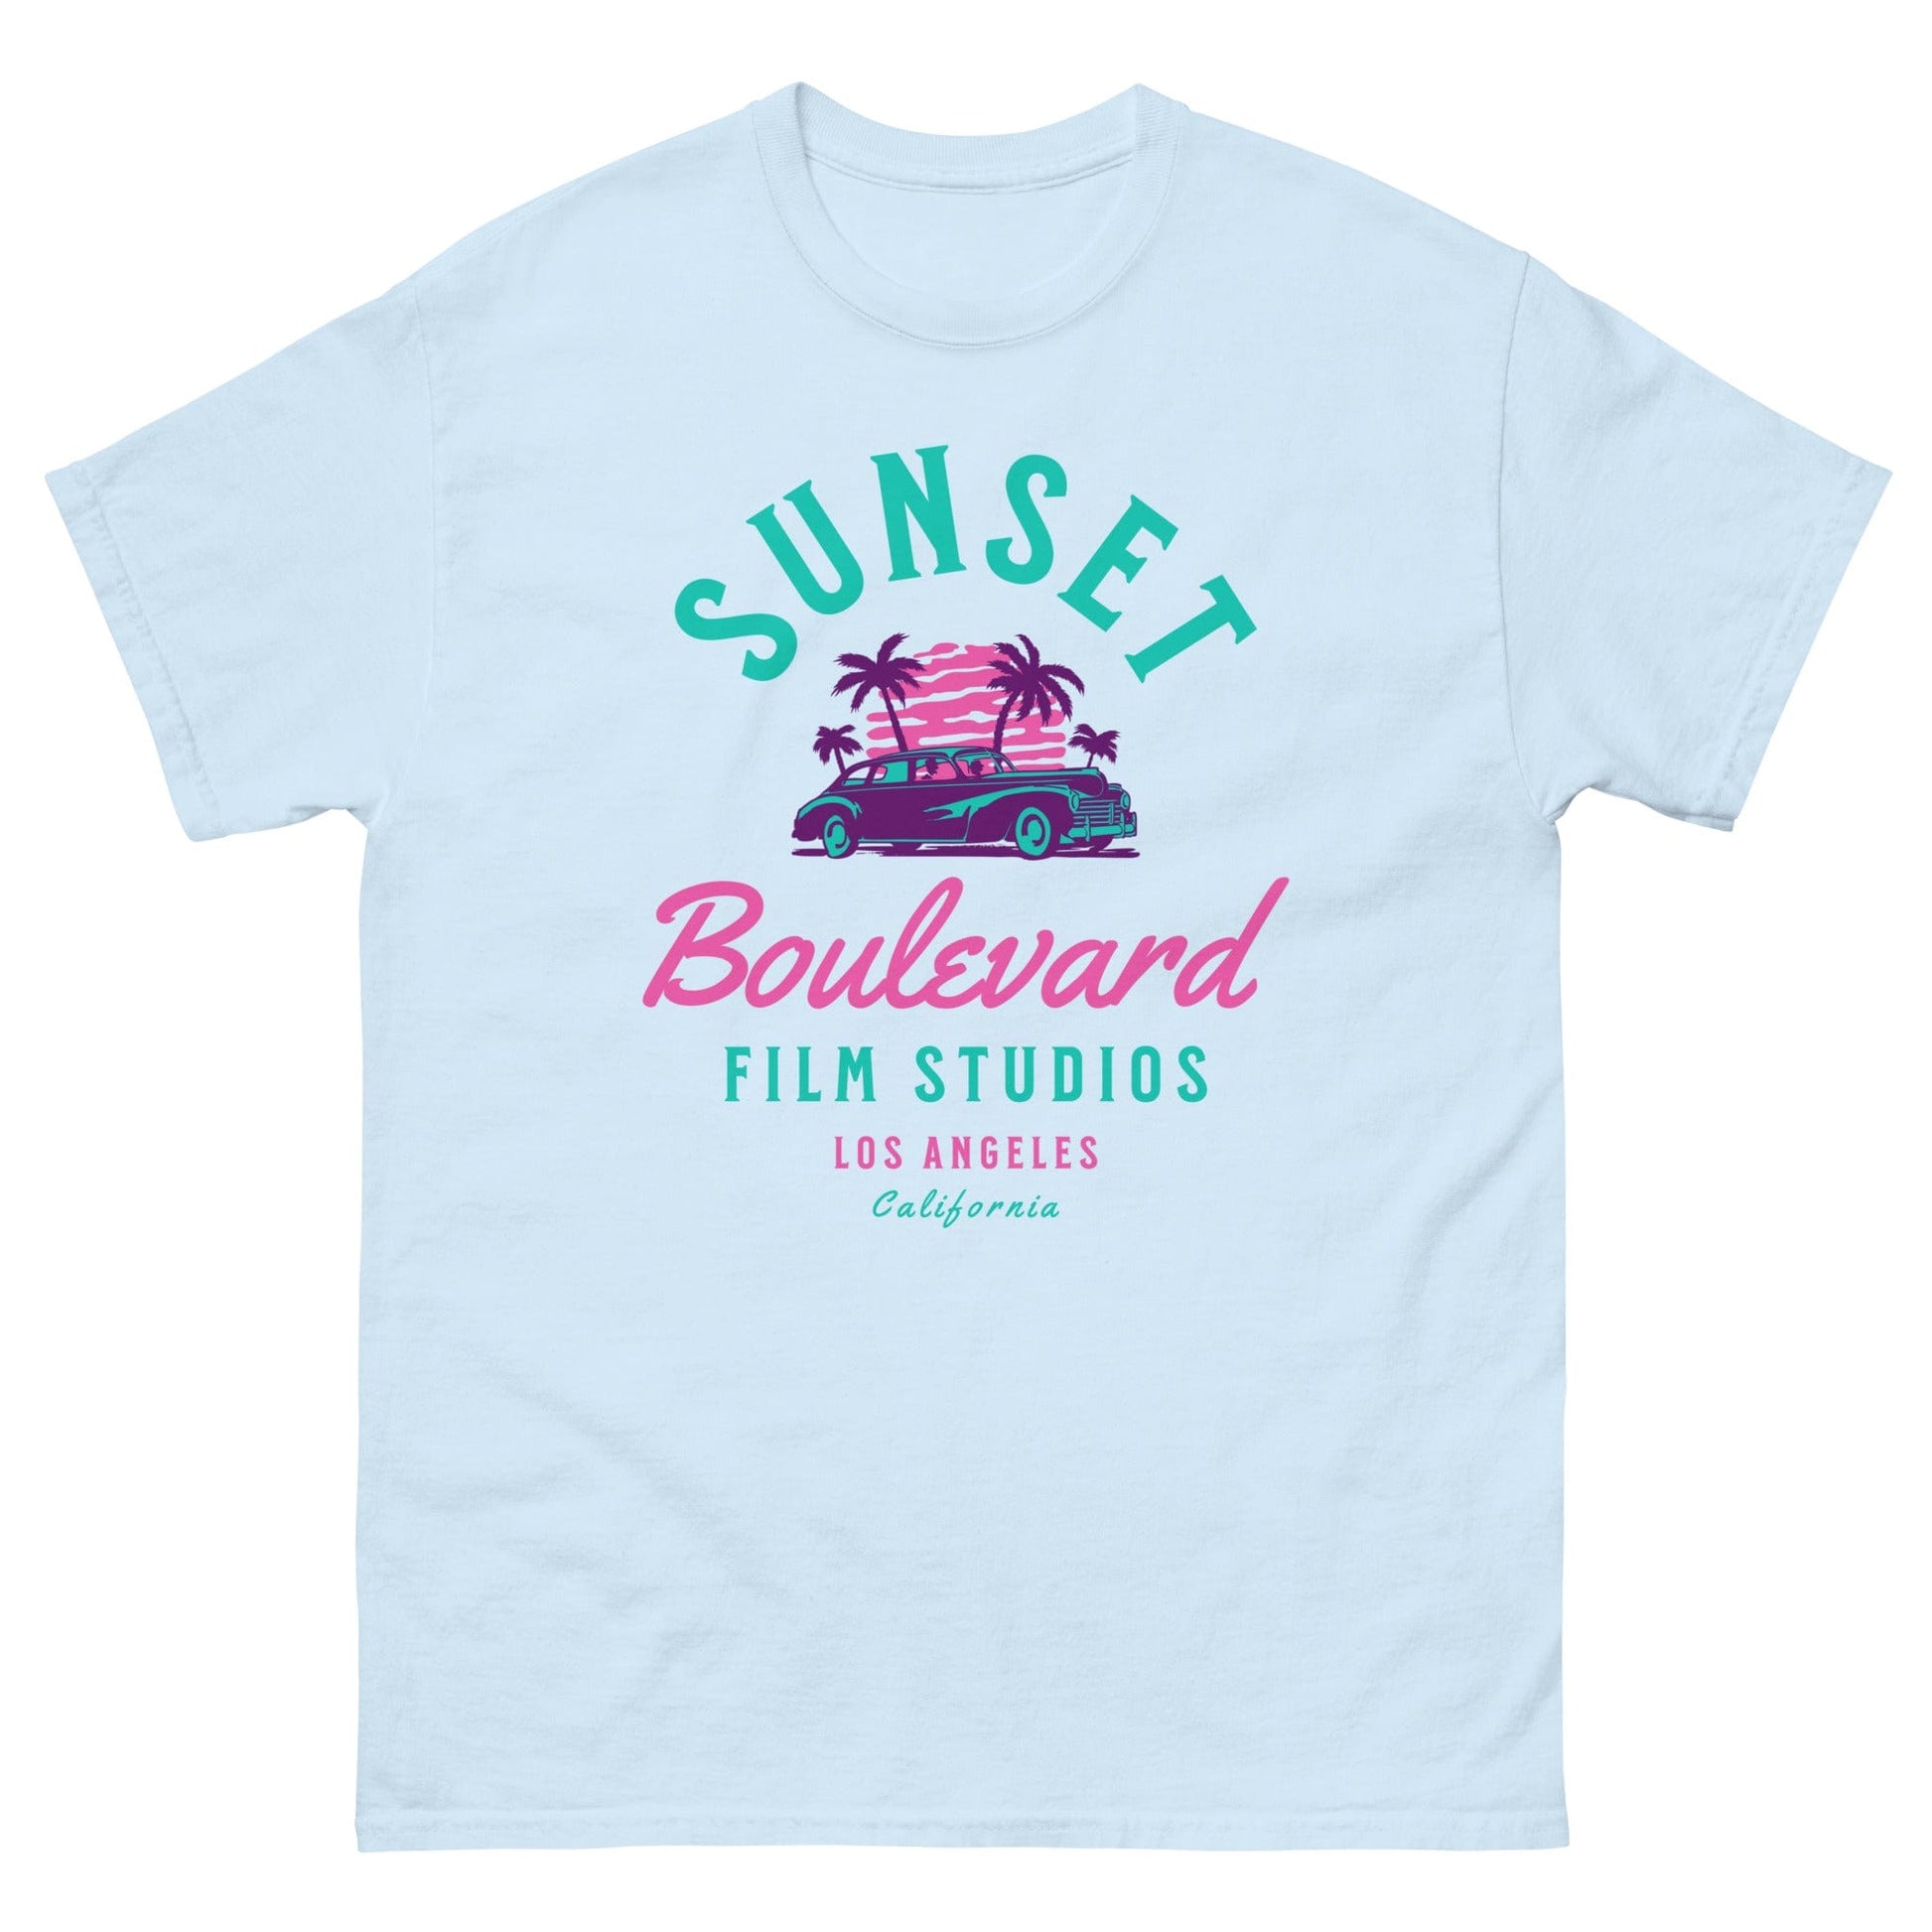 Sunset Boulevard Film Studios T-shirt Light Blue / S